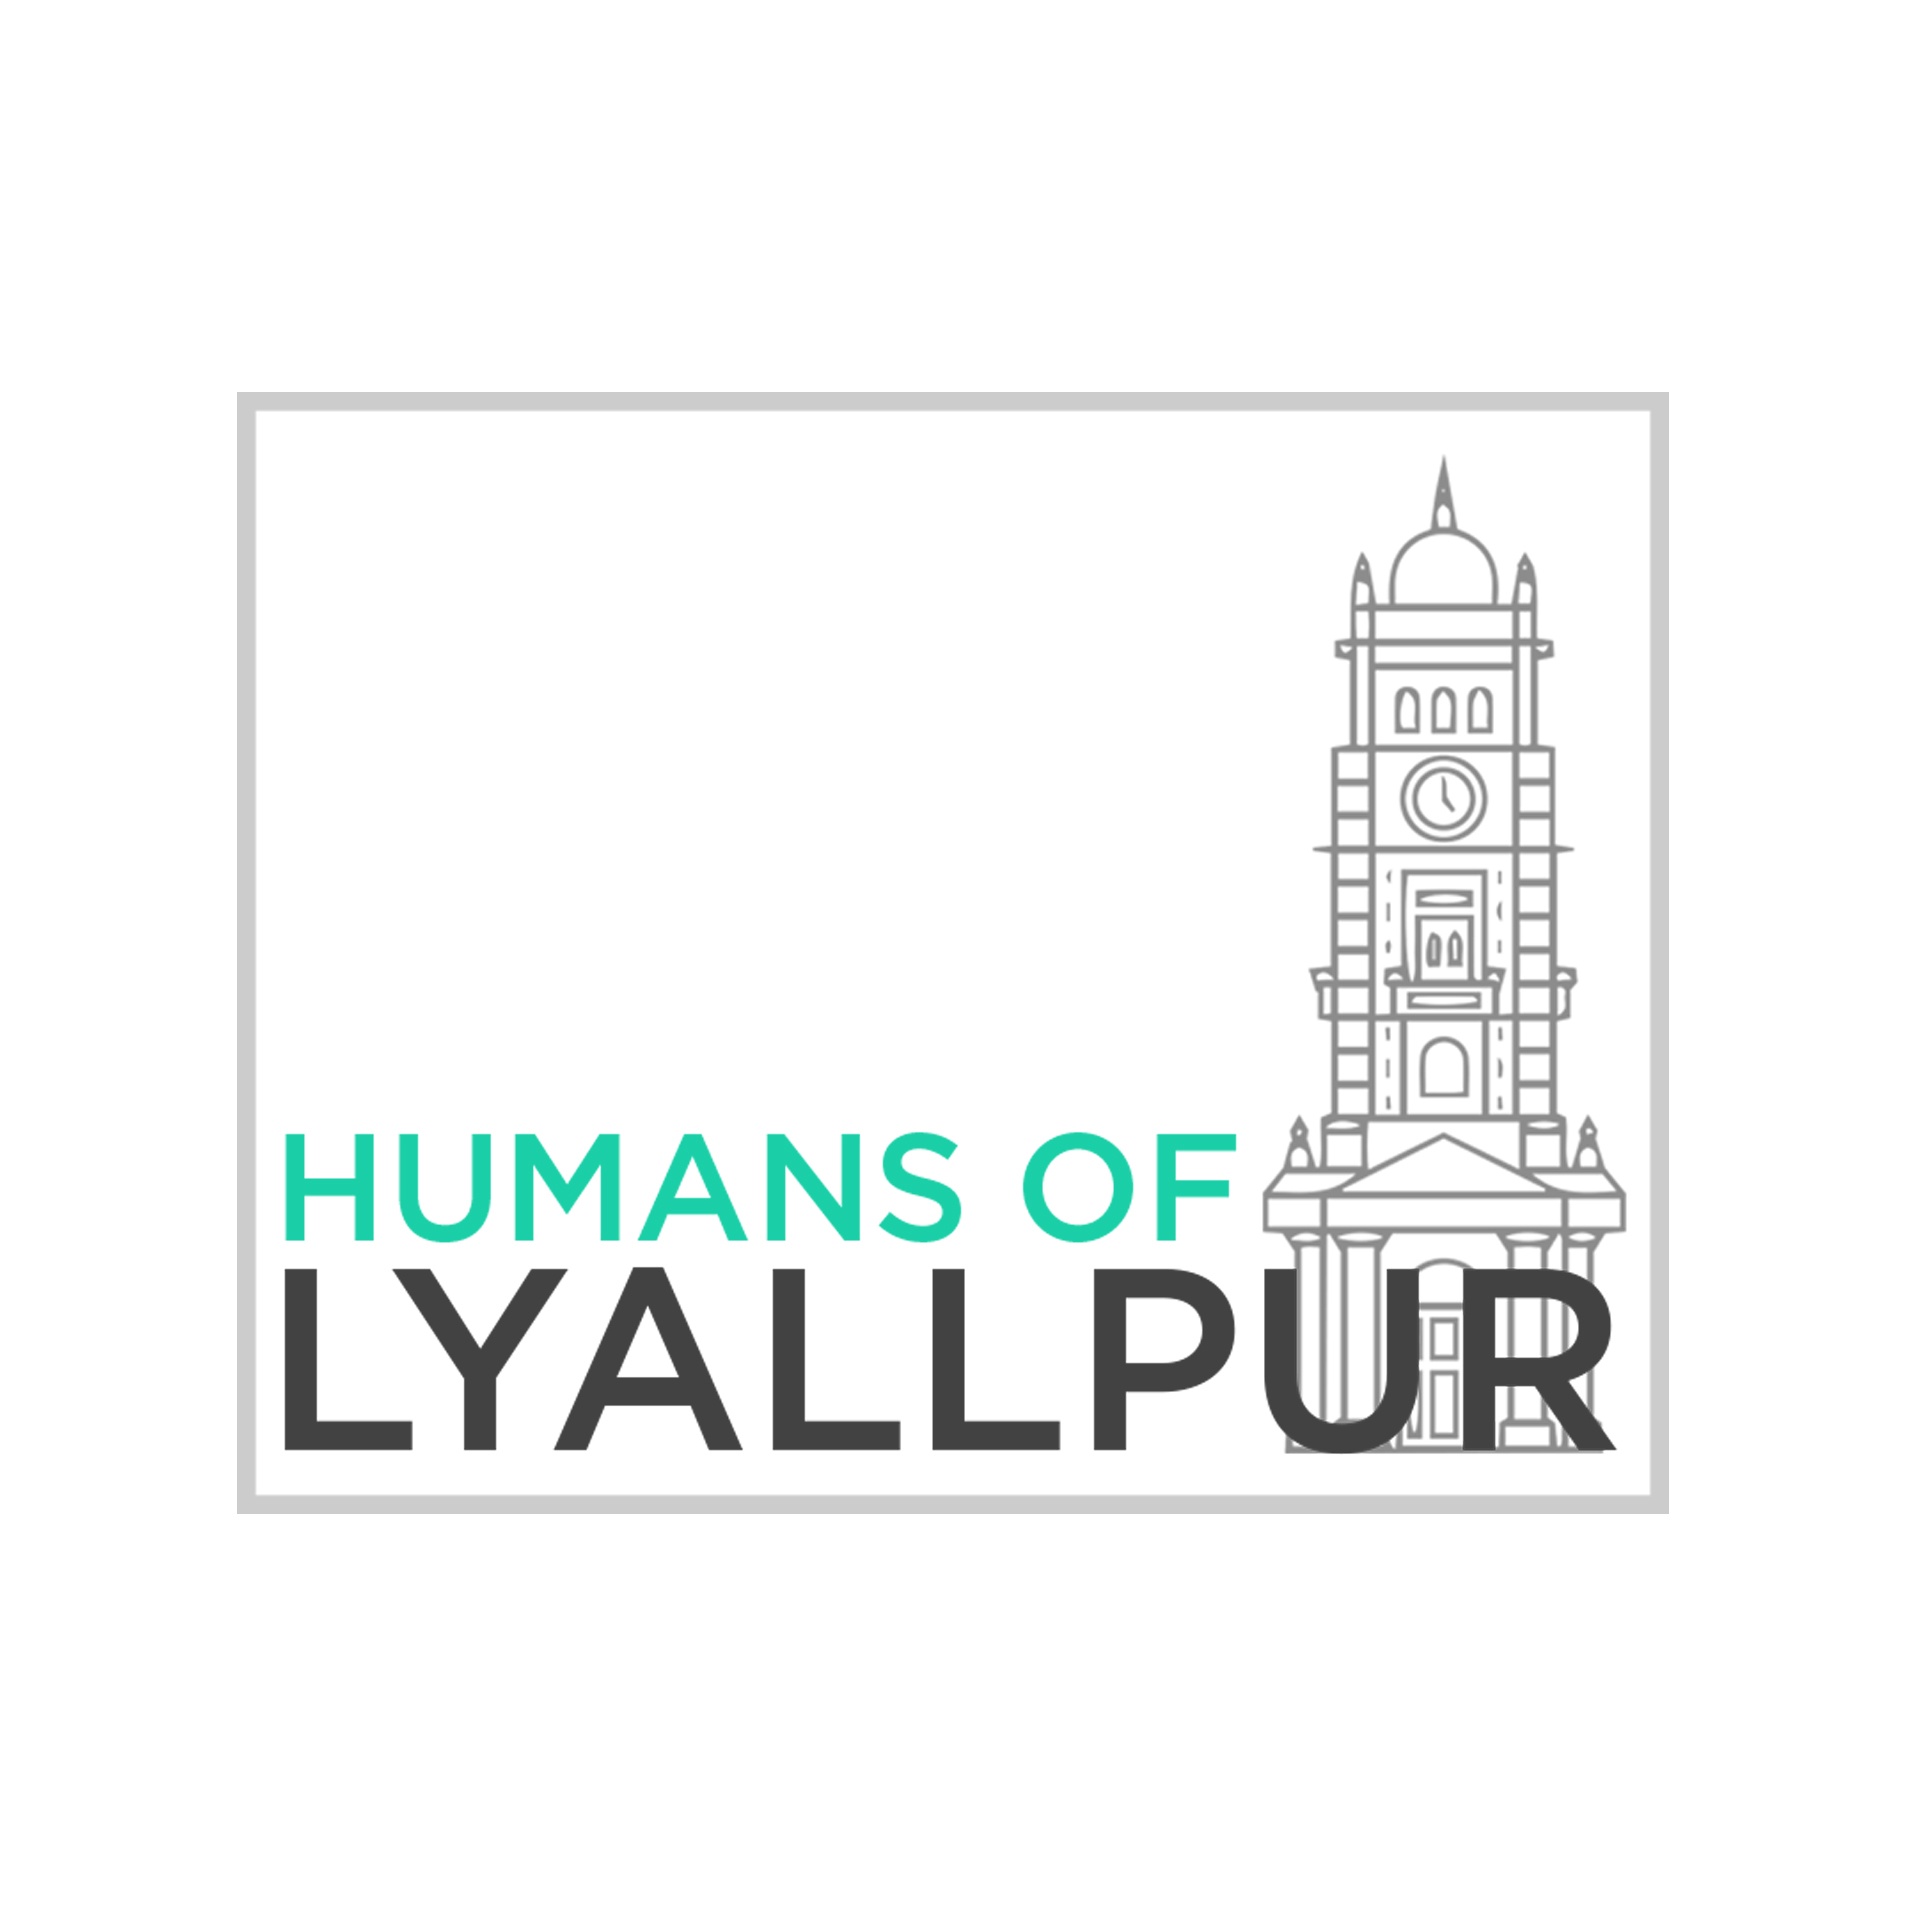 Humans of Lyallpur